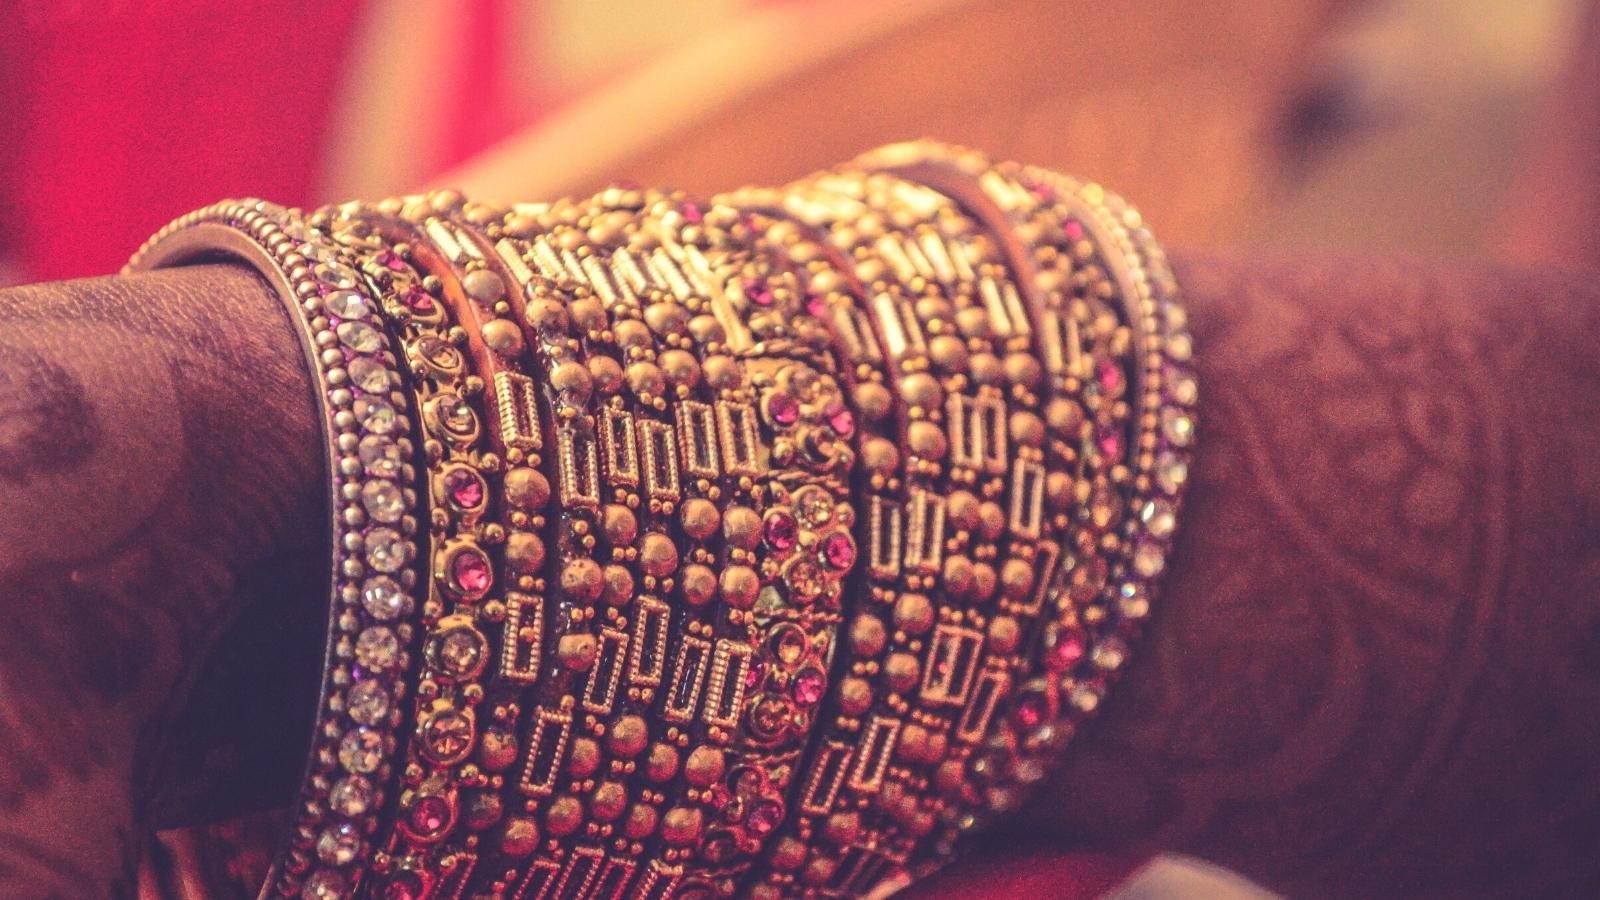 The broken wedding bangles - Comprendre vos rêves - Kaya